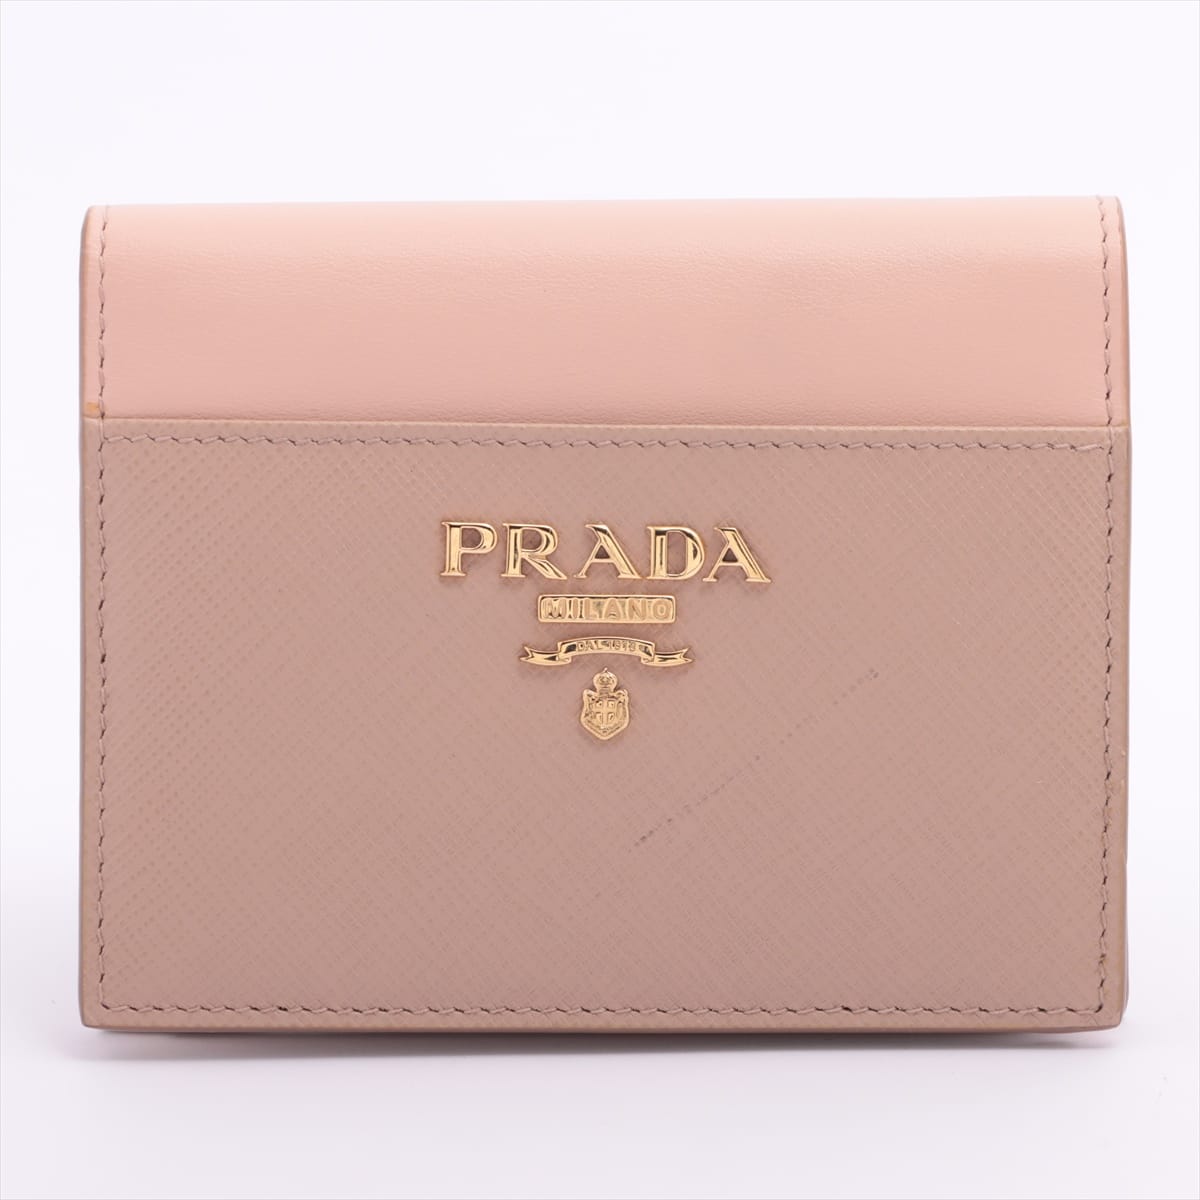 Prada Saffiano Leather Compact Wallet Beige